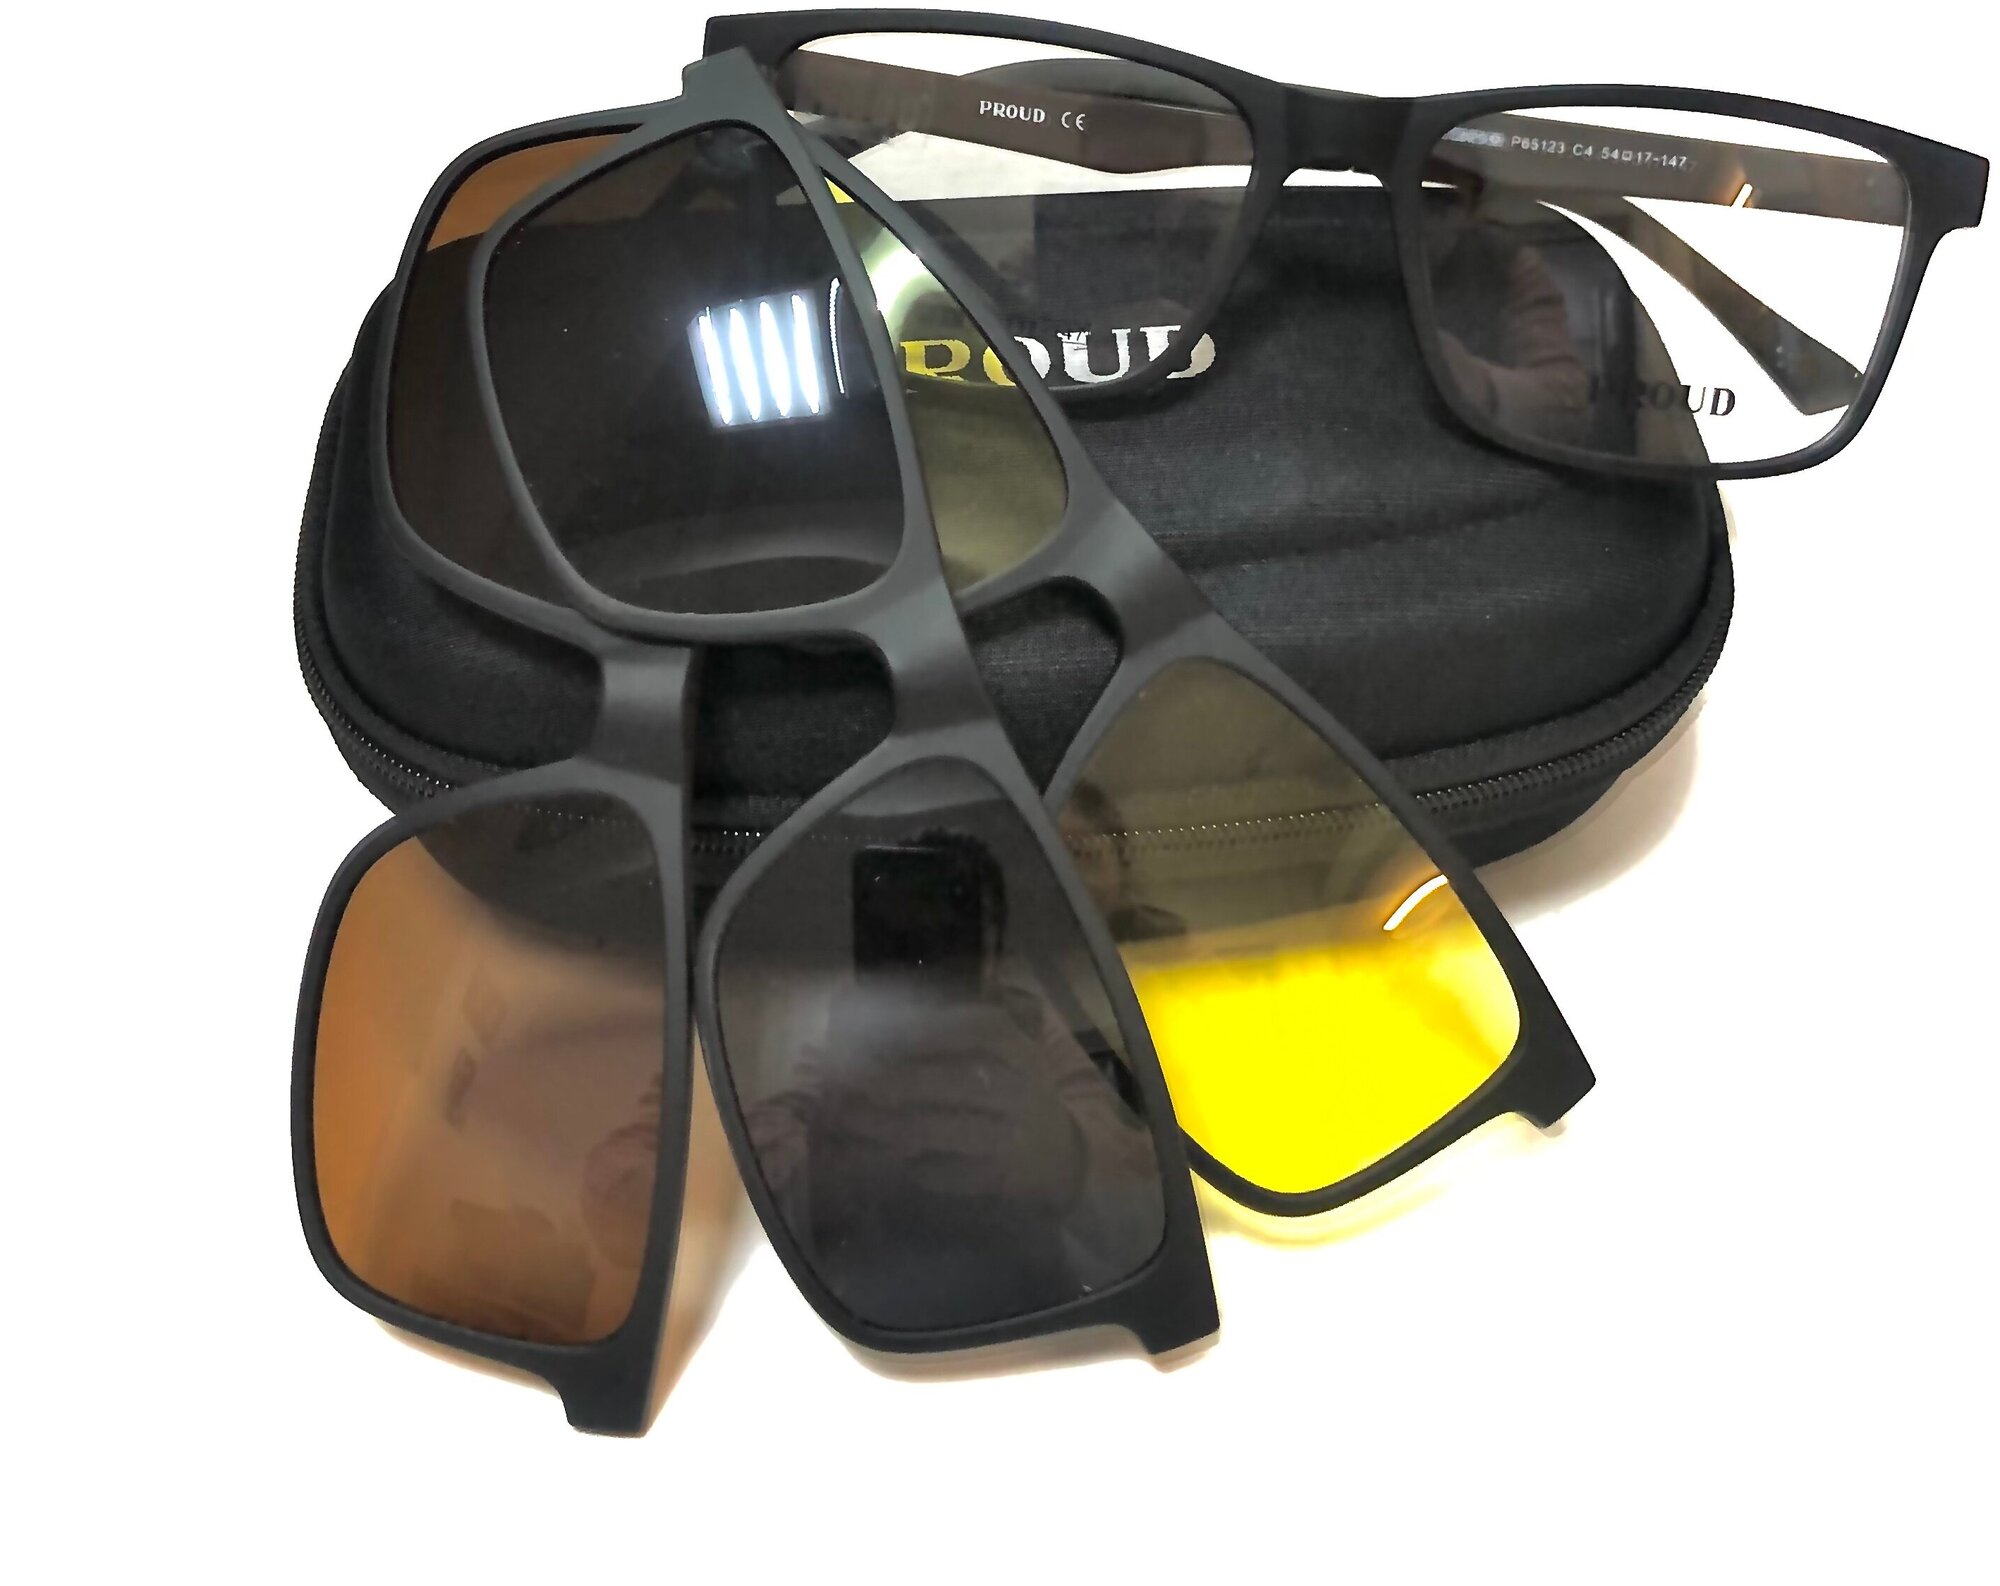 Оправ. медицинская оправа мужская оправа оправа с насадками очки очки с солнцезащитными насадками очки с поляризацией аксессуары